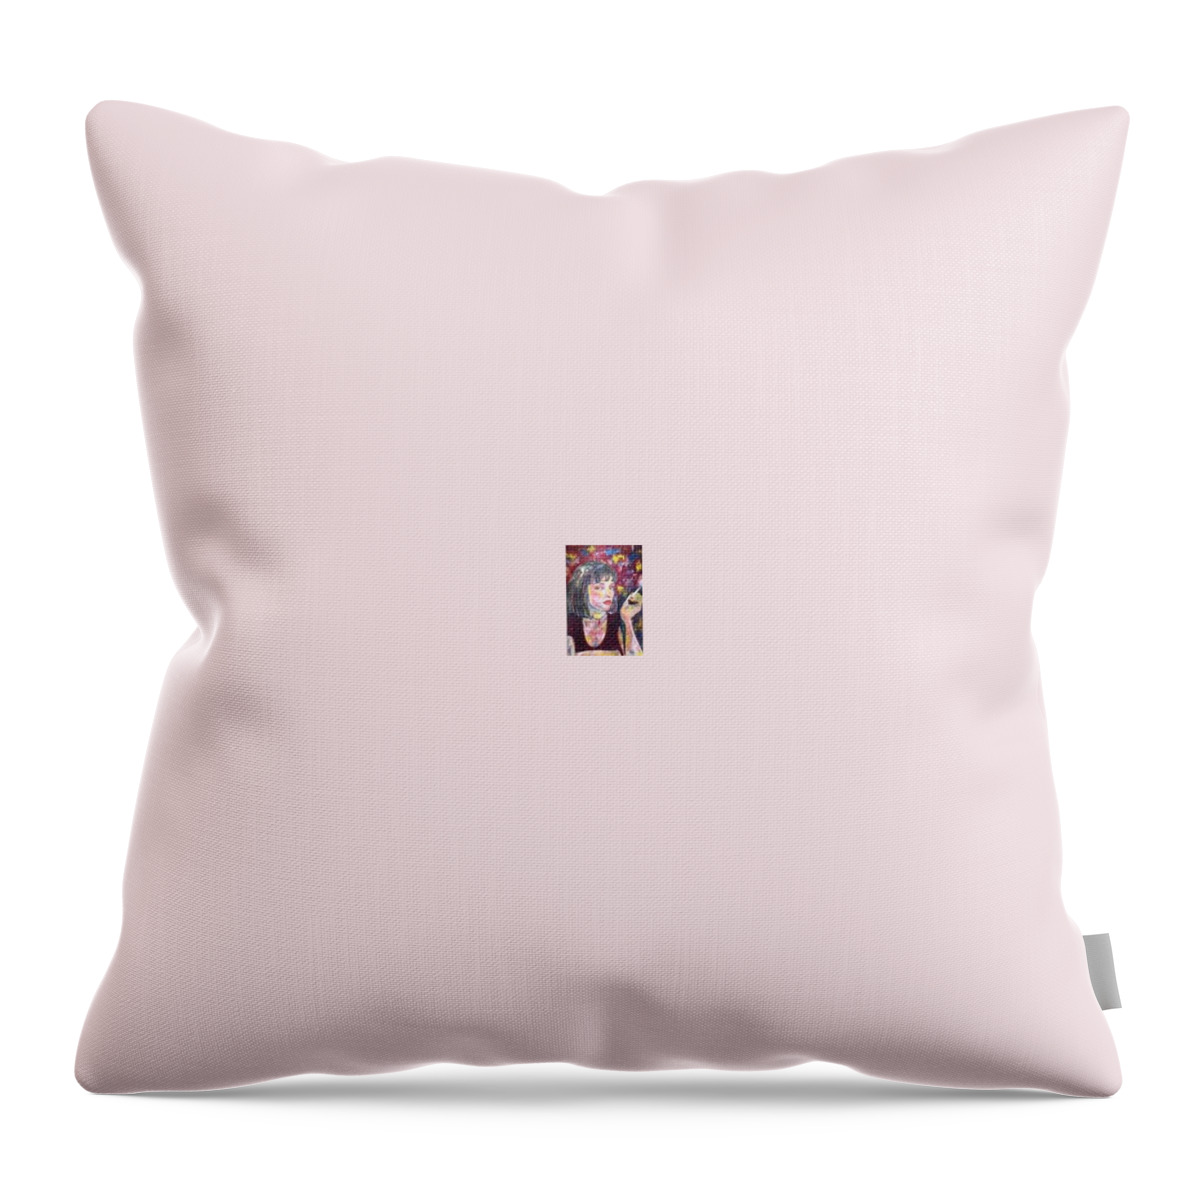 Uma Thurman Throw Pillow featuring the painting Uma Thurman by Sam Shaker